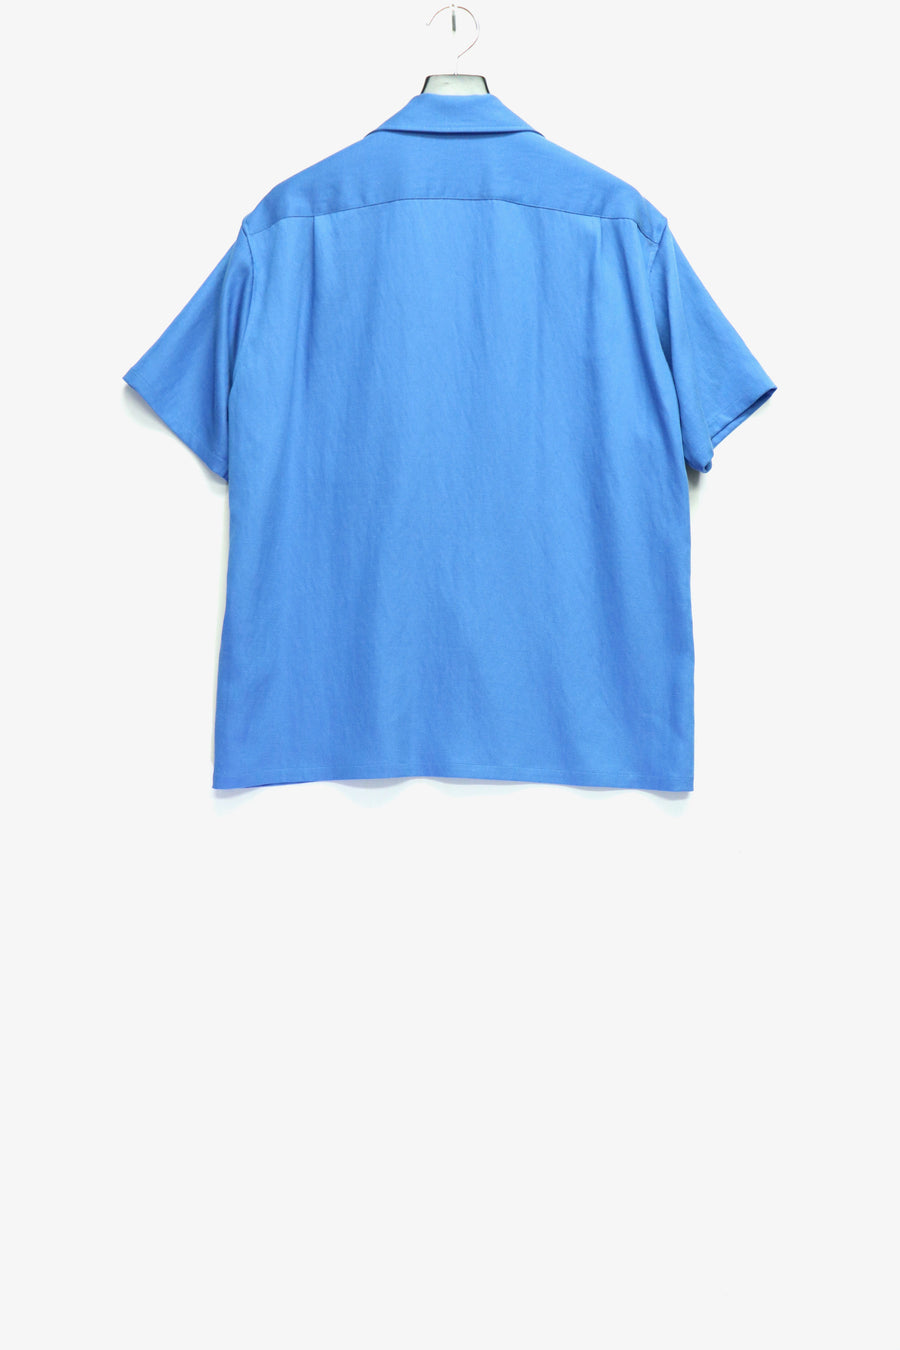 TOGA VIRILIS  Embroidery western S/S shirt(L.BLUE)